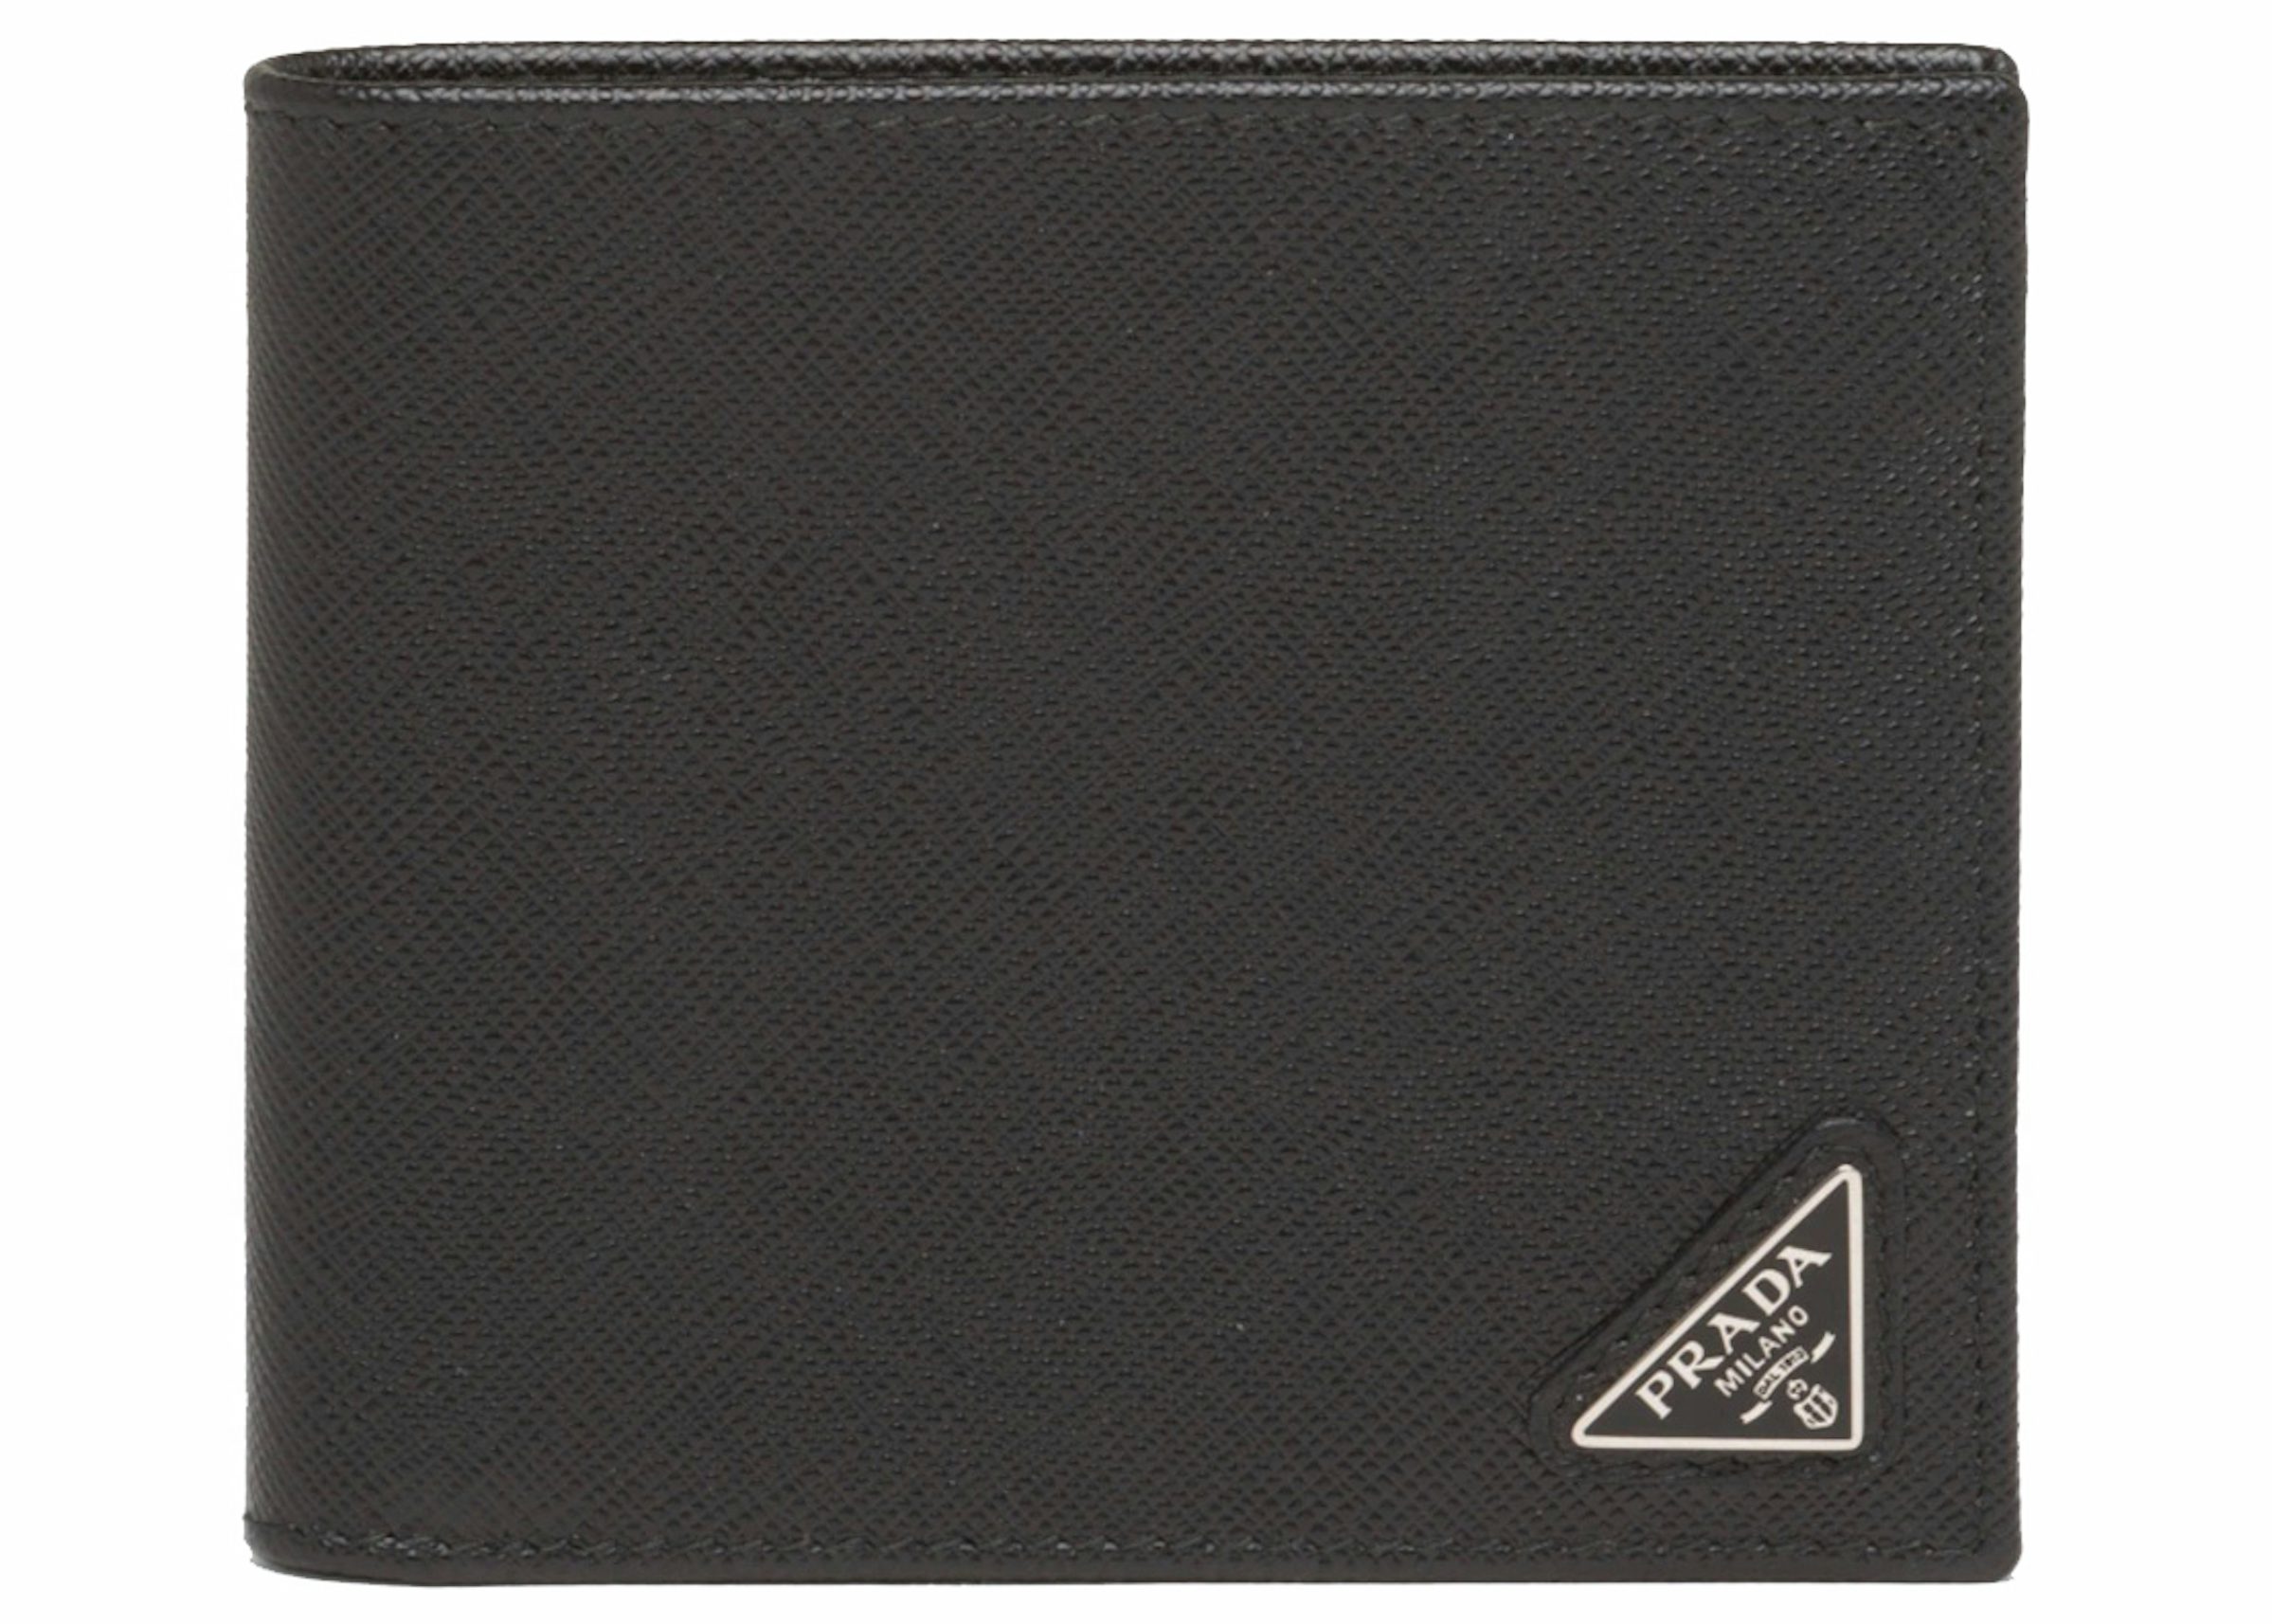 Prada Saffiano Leather Card Holder Black 100% Authentic Luxury